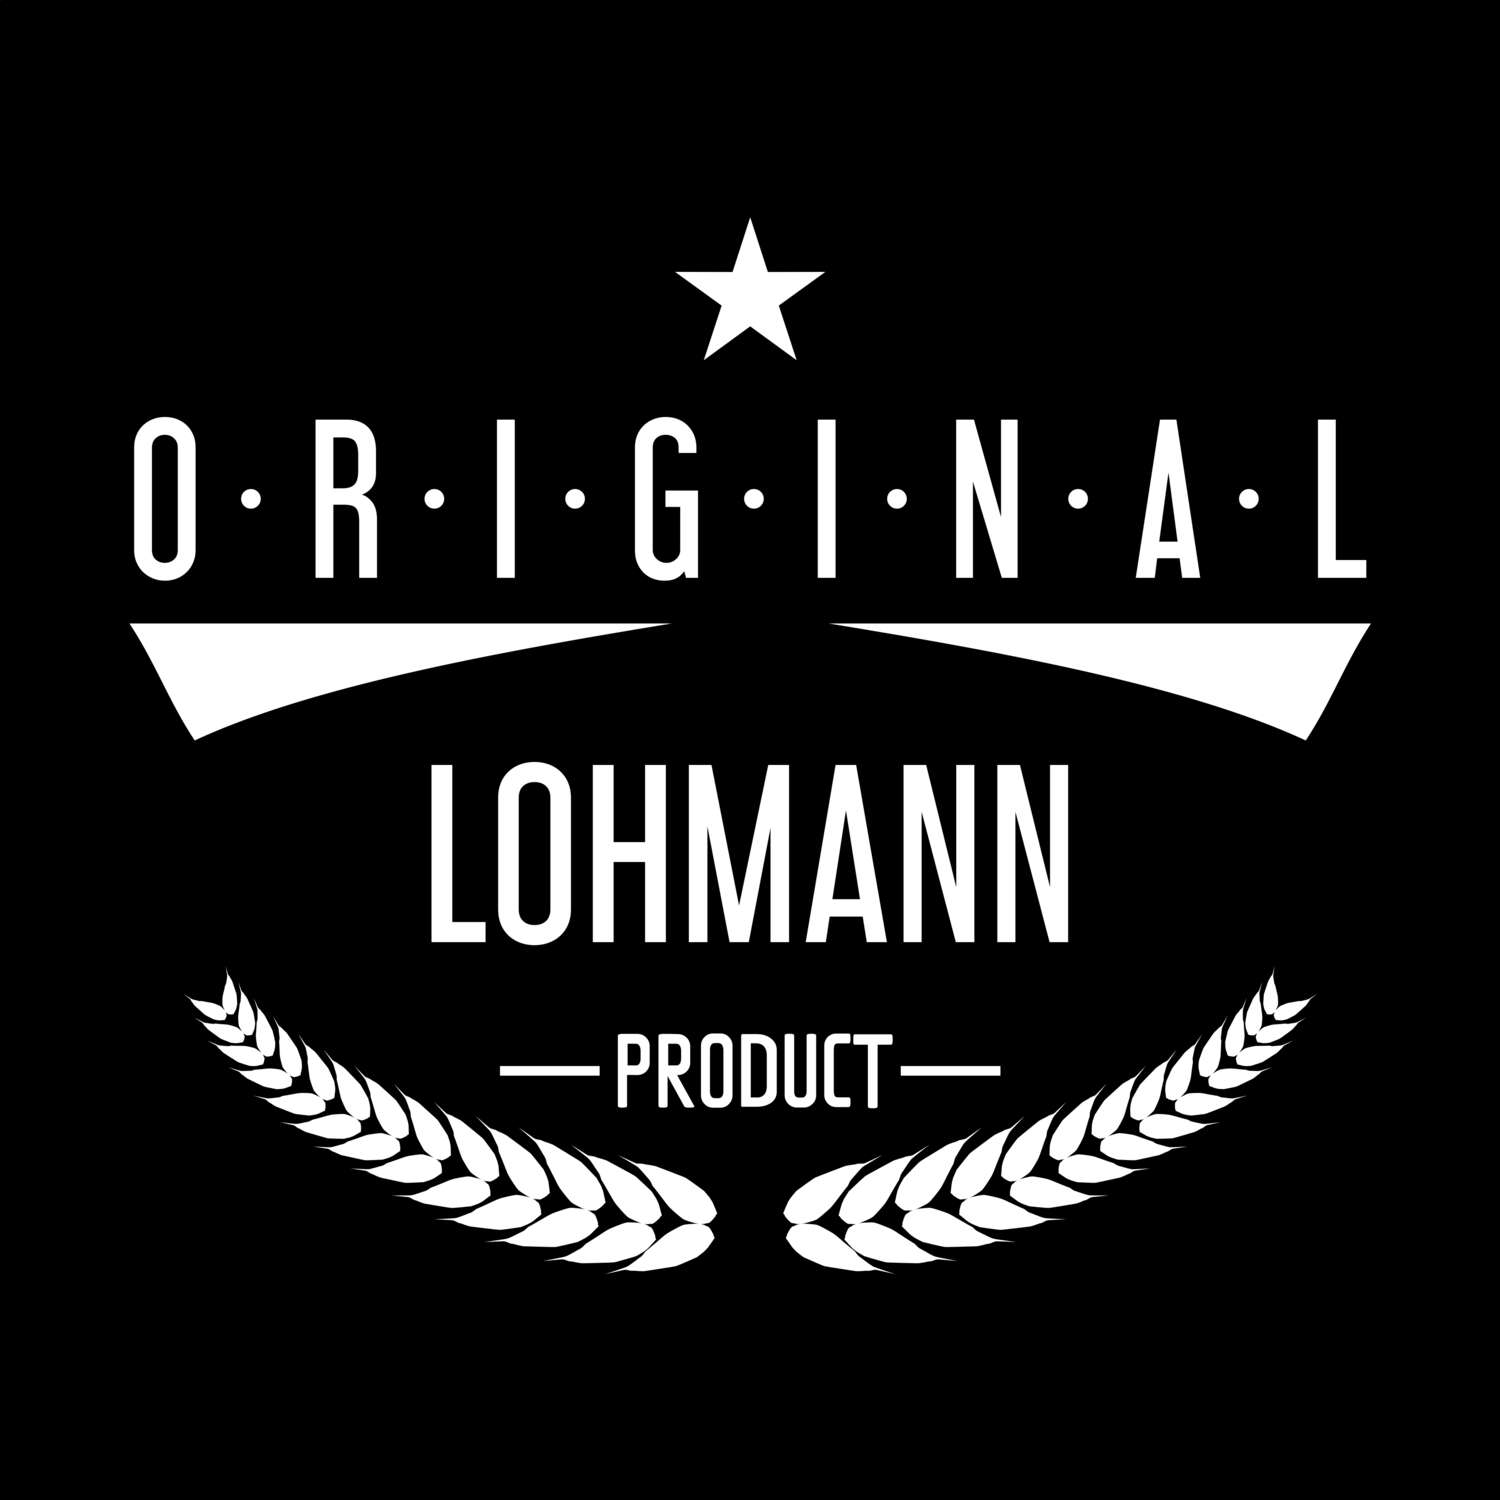 Lohmann T-Shirt »Original Product«